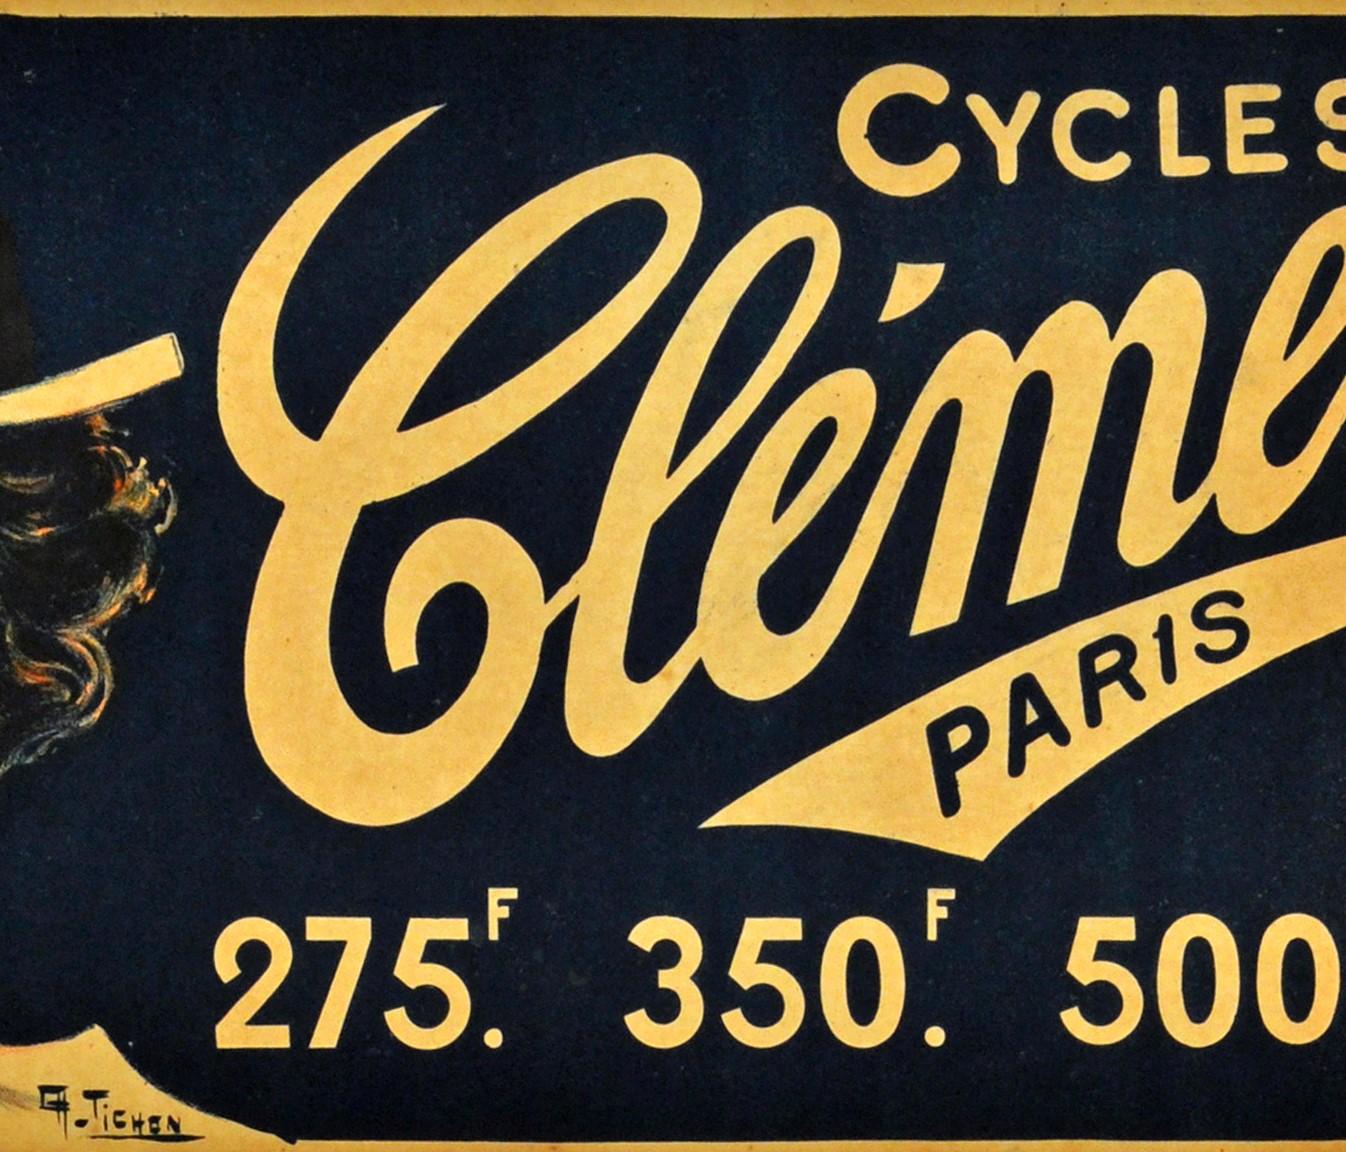 mallorca cycling poster